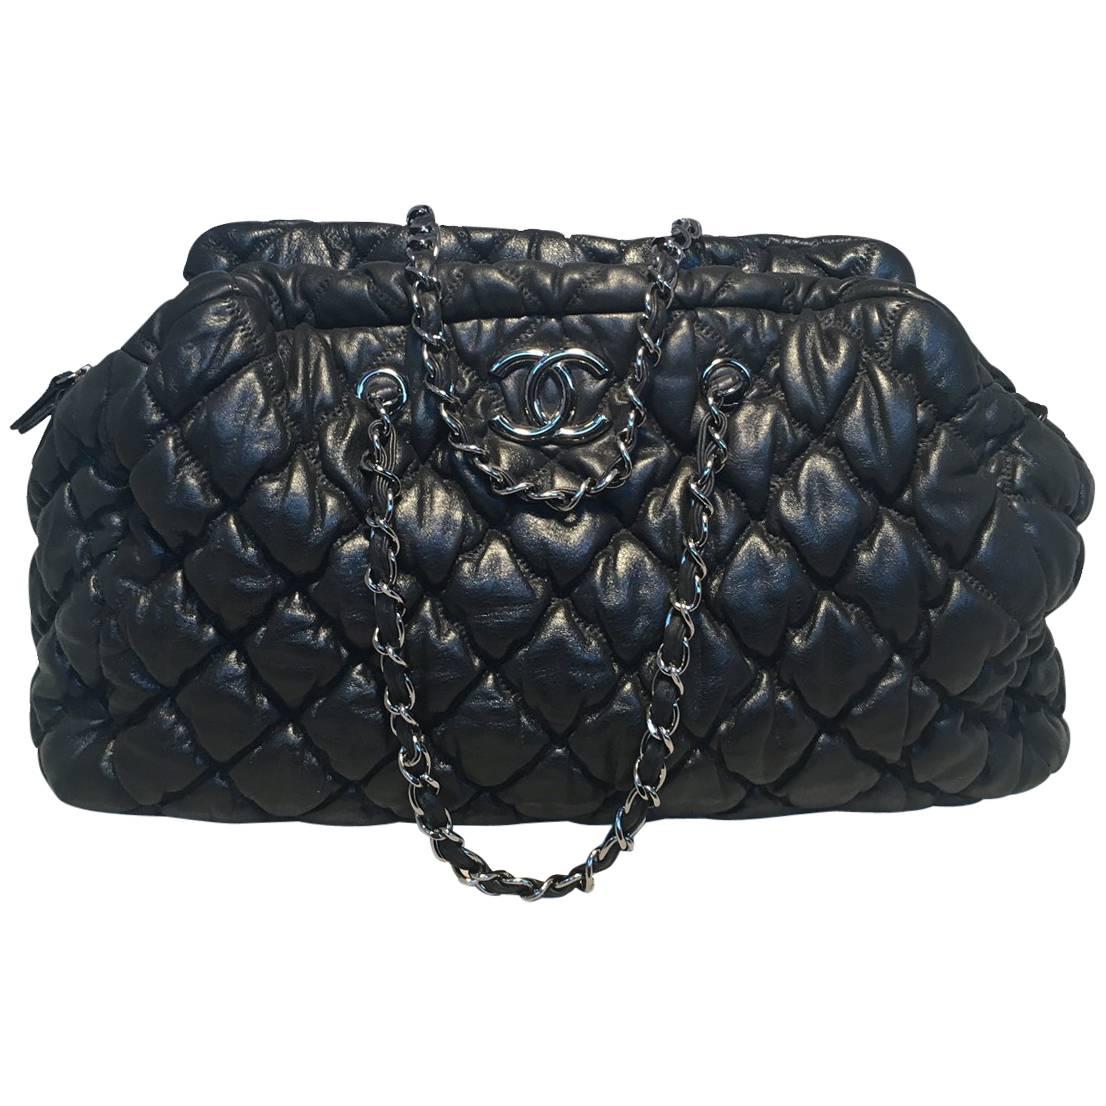 chanel large black tote handbag